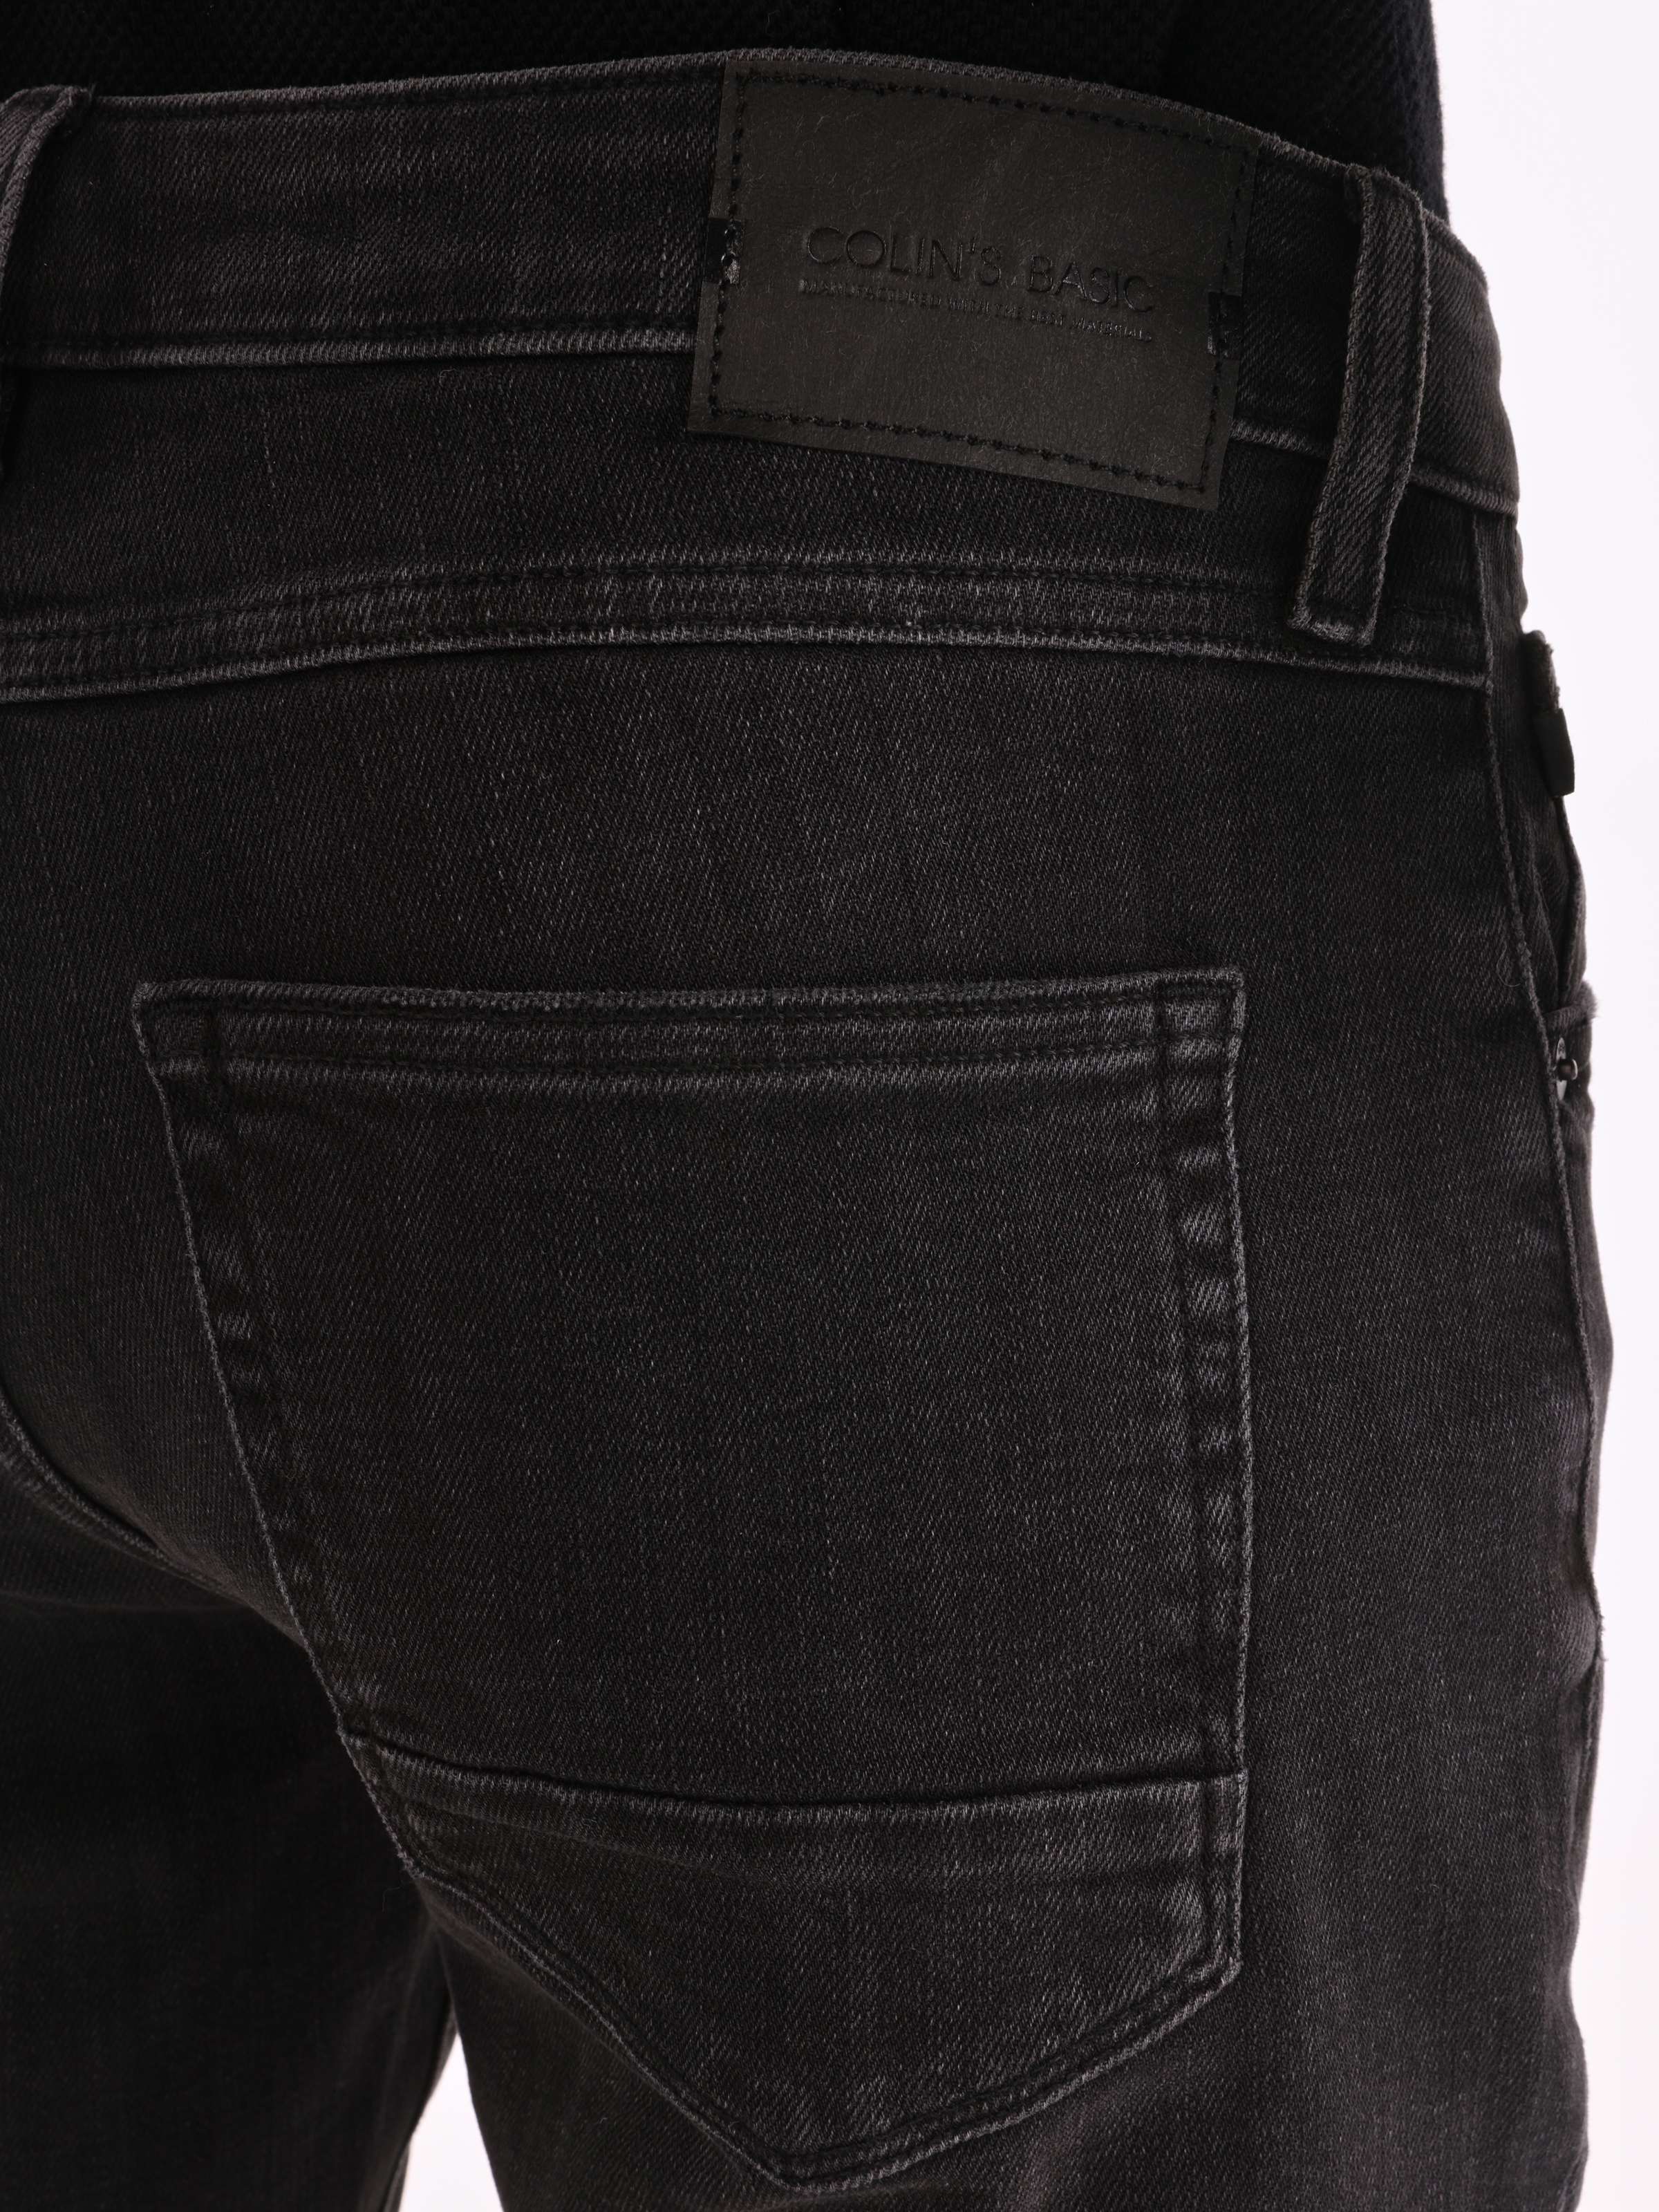 Afișați detalii pentru Pantaloni De Barbati Negru Straight Fit 044 KARL 